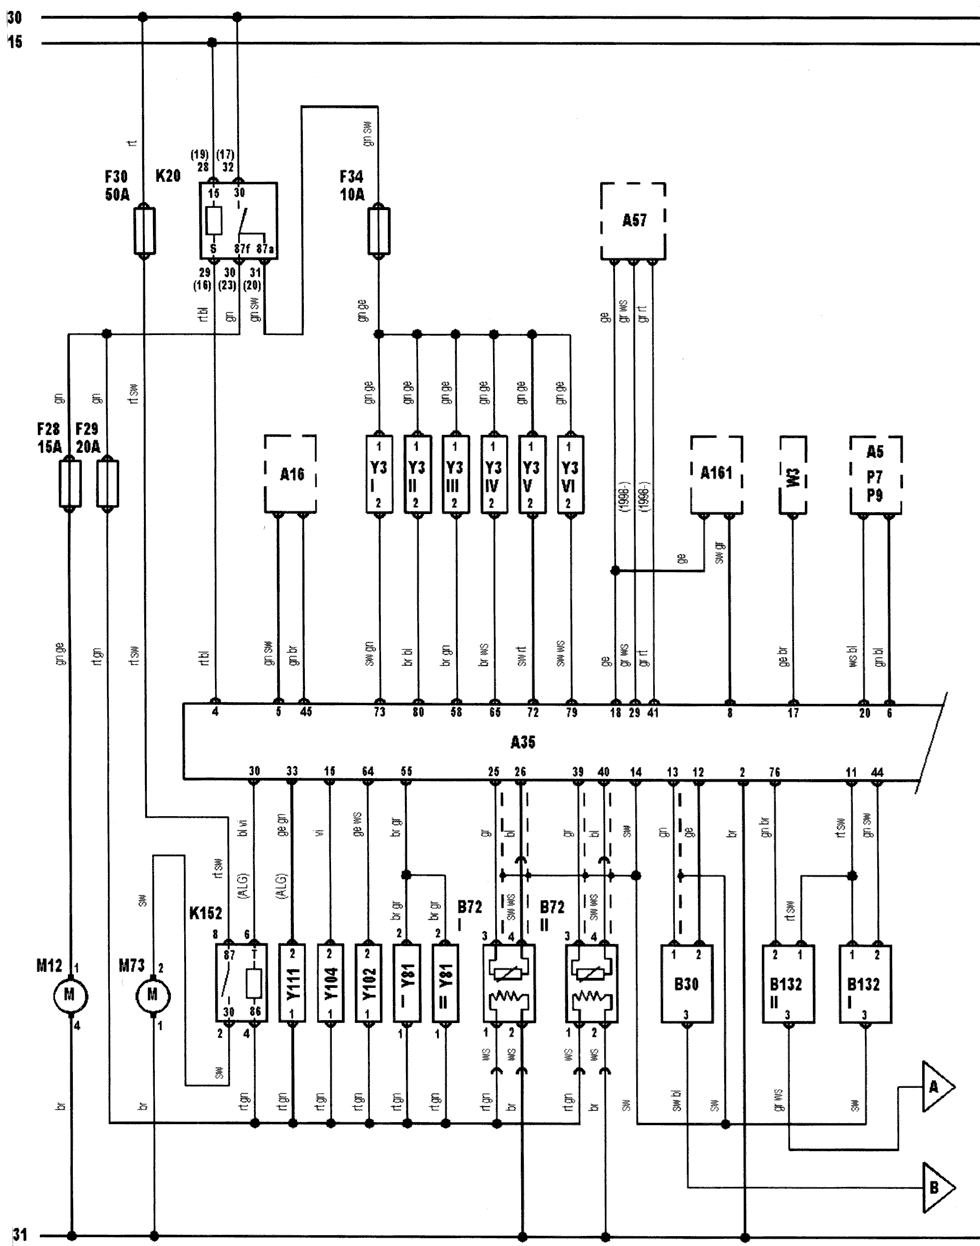 echlin tp 41 modulator wiring diagram